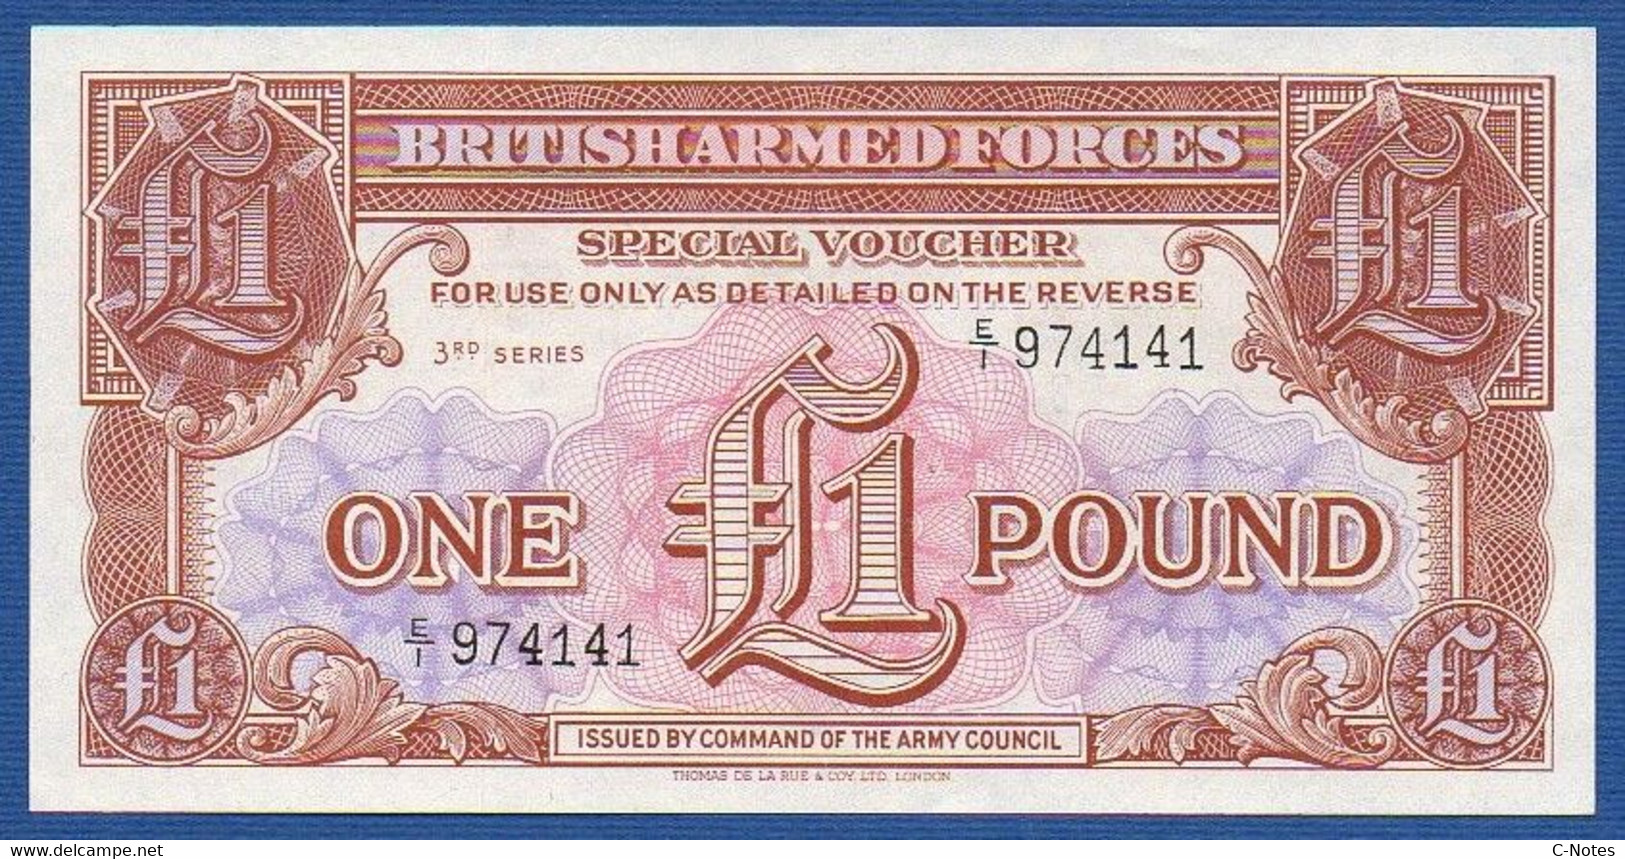 GREAT BRITAIN - P.M29 – 1 Pound ND (1956) UNC, Serie E/1 974141 - British Armed Forces & Special Vouchers